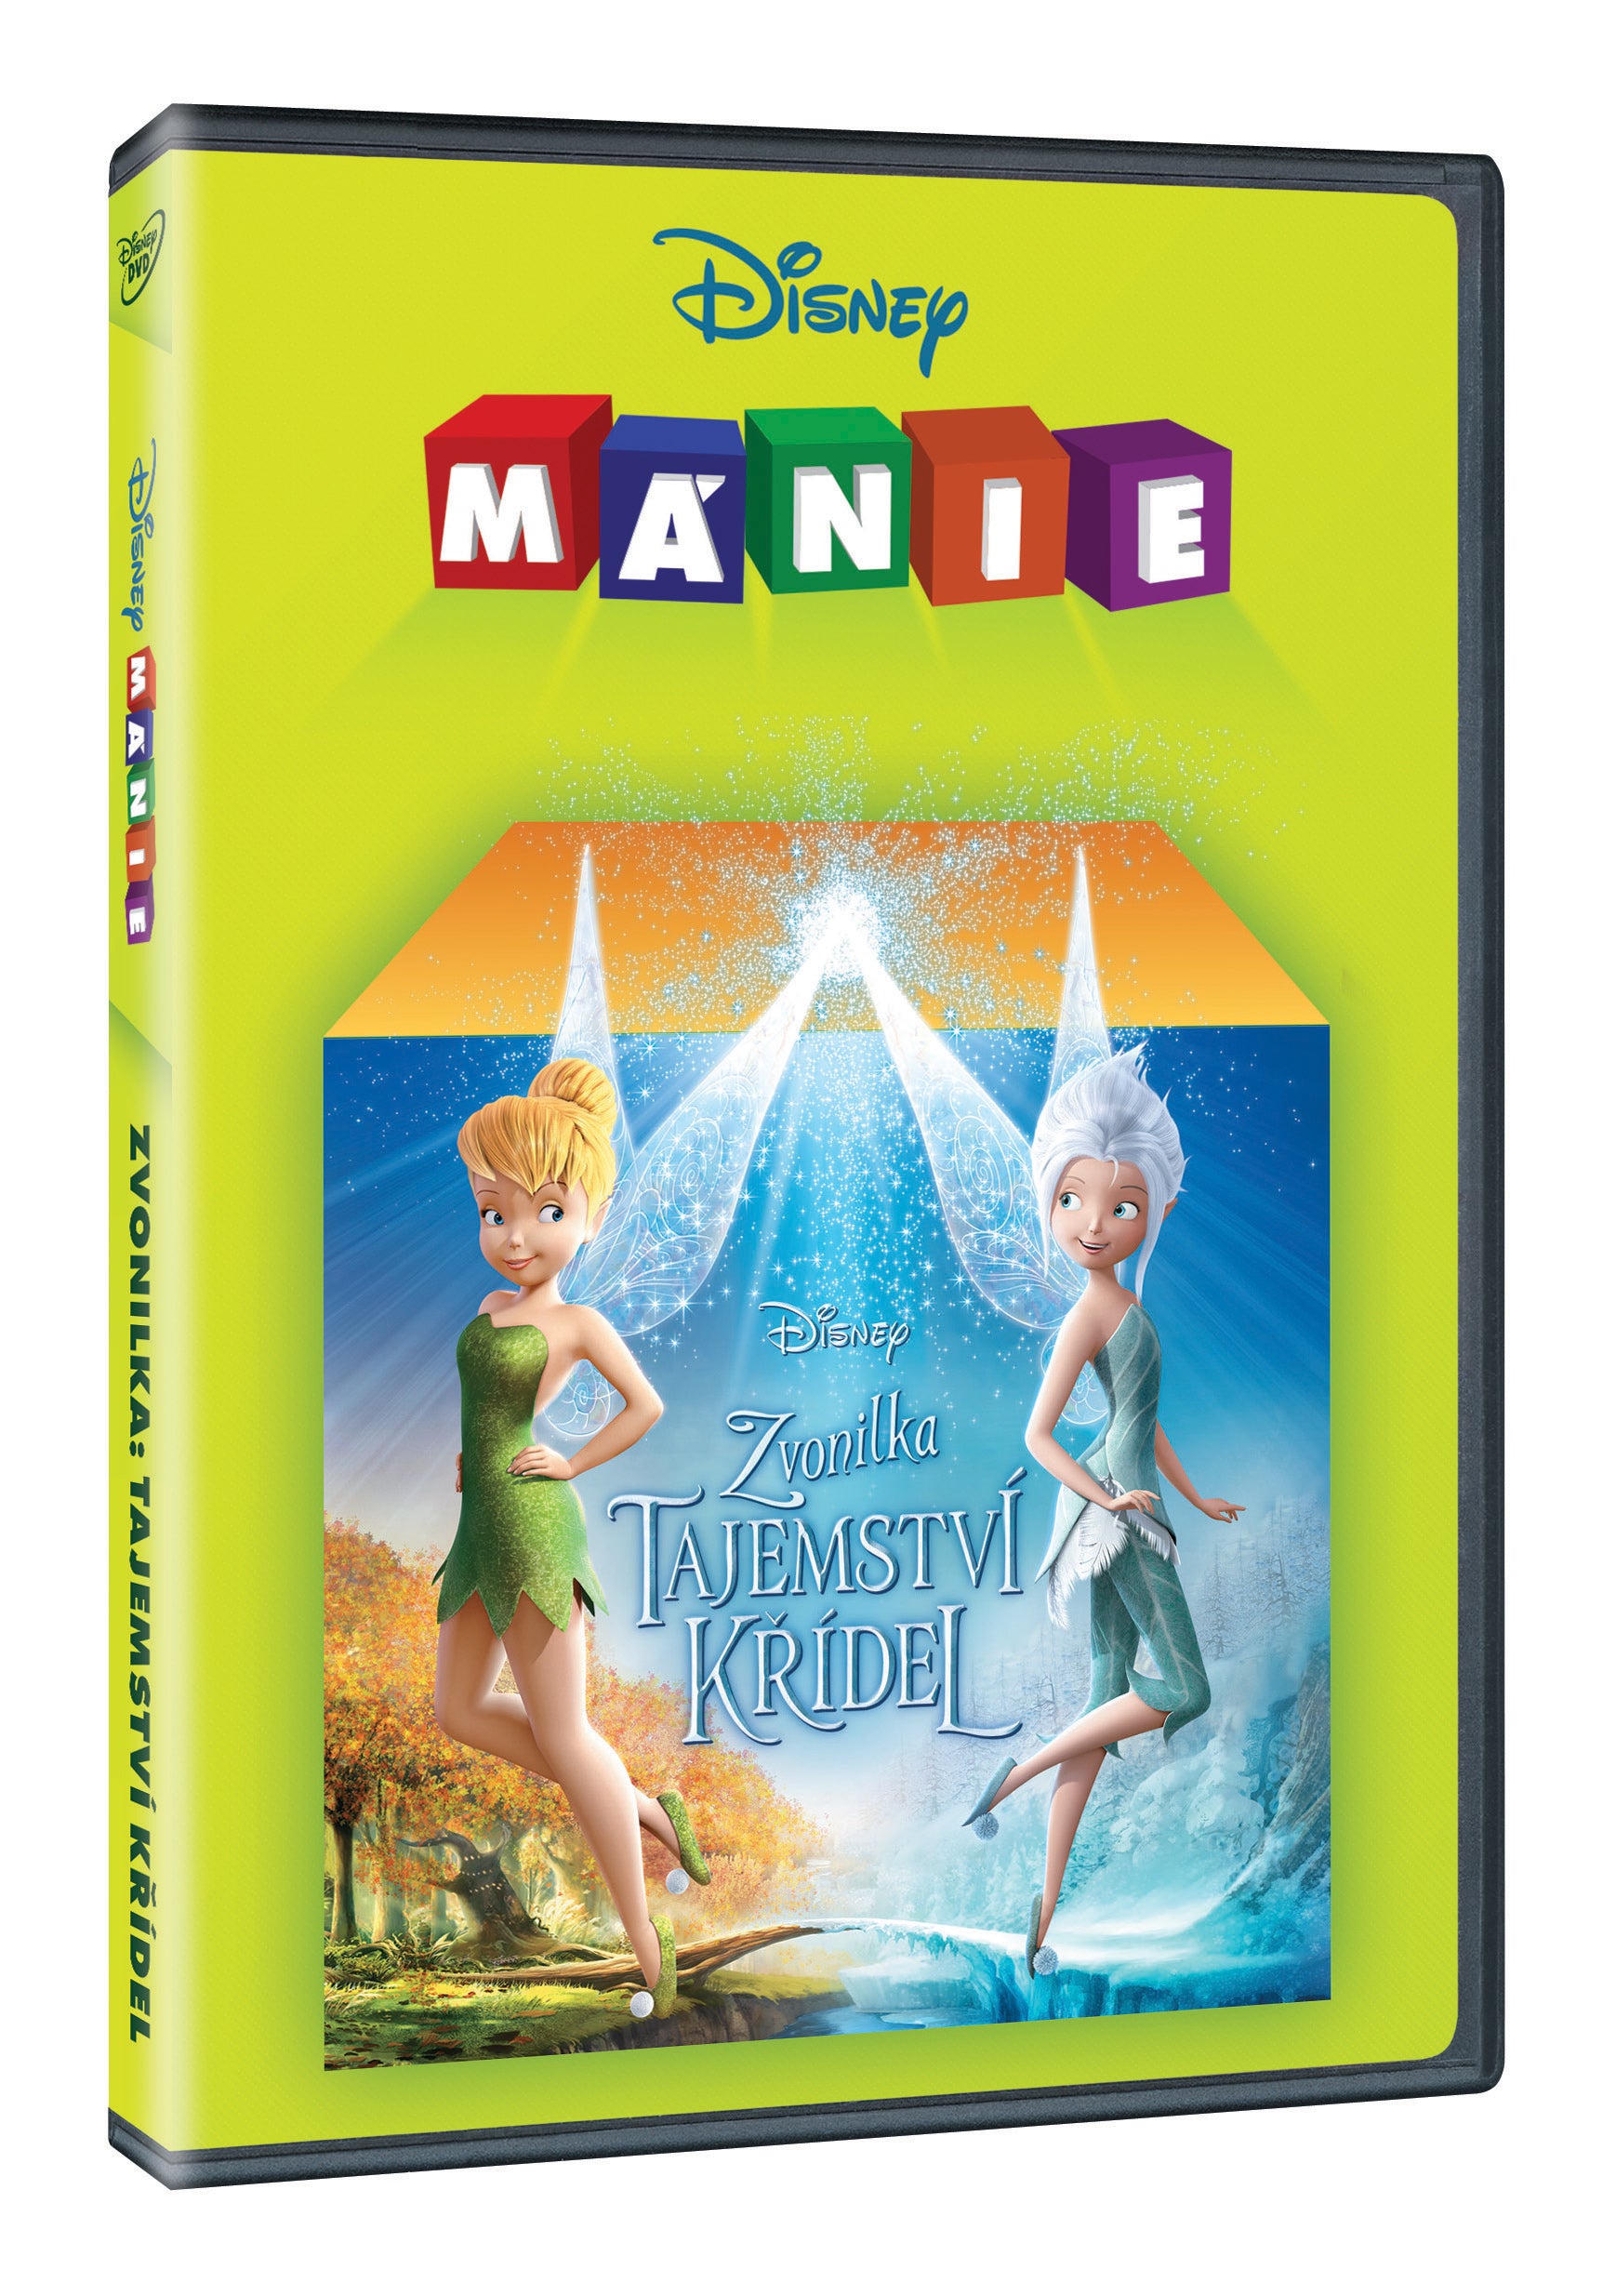 Download: Tajemstvi kridel DVD - Edice Disney manie / Secret of the Wings